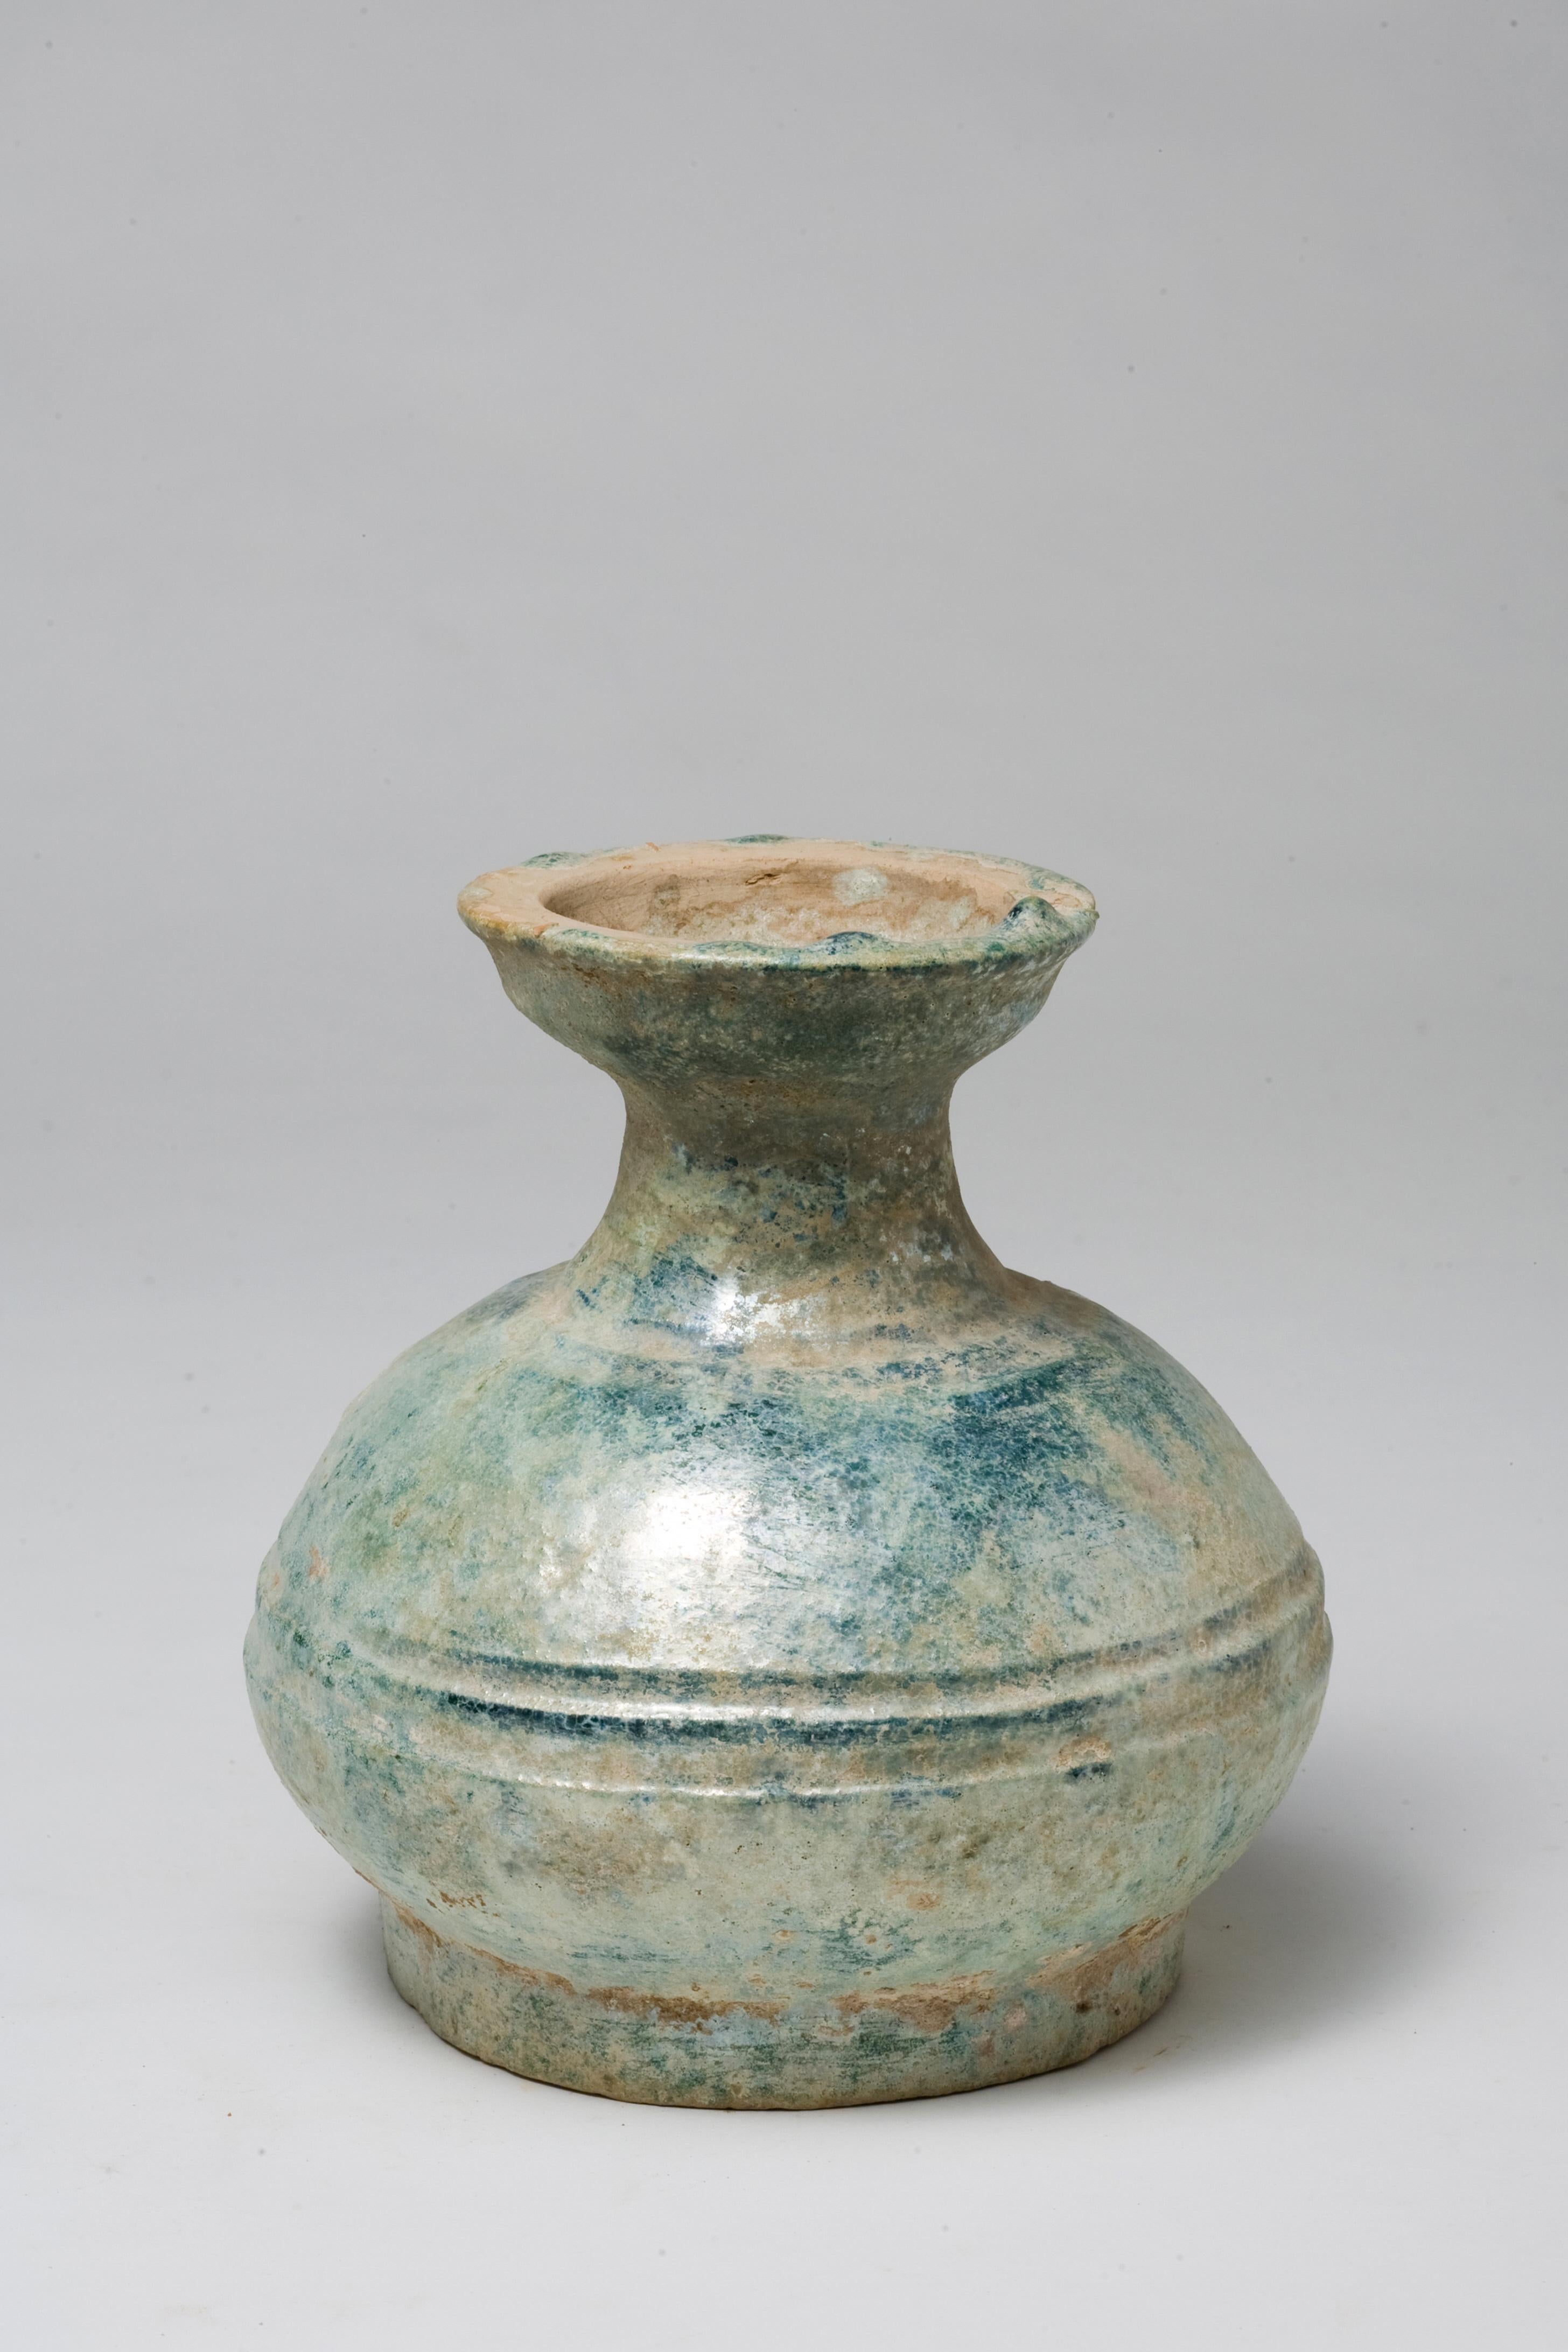 Hu Shape Green-Glazed Vase, Han Dynasty(206 BC - 220 AD) For Sale 6